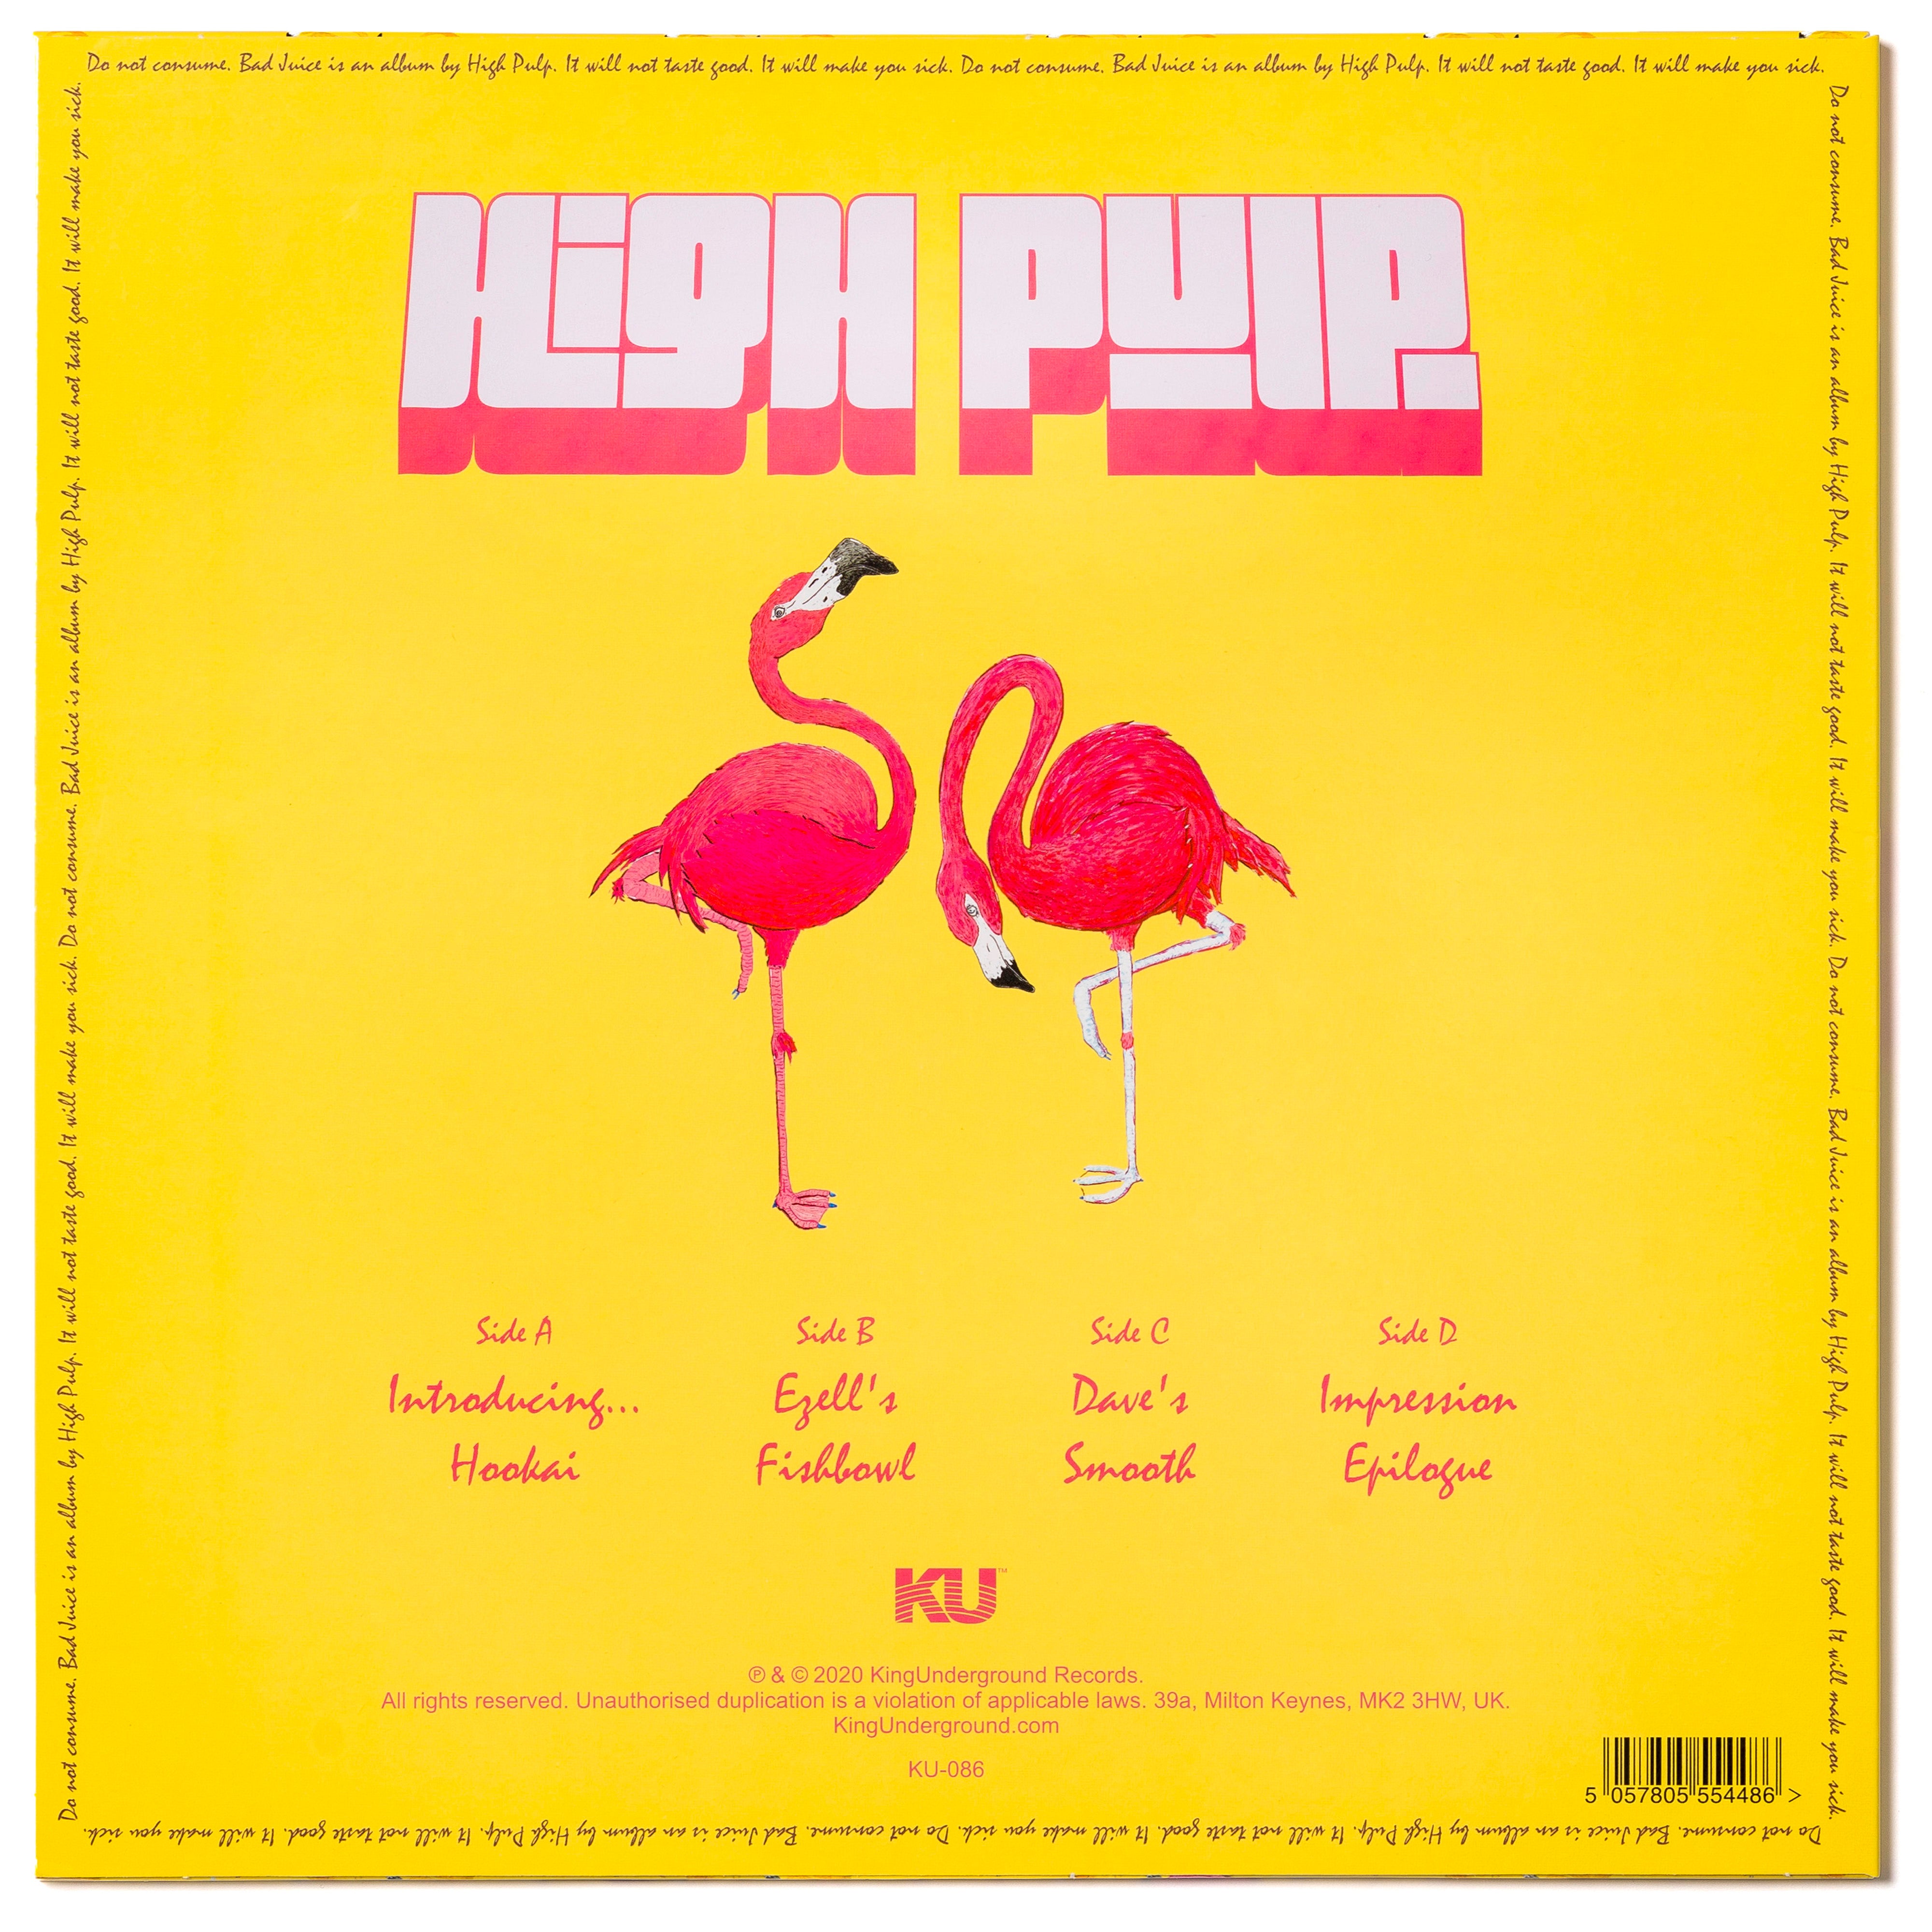 Bad Juice 2xLP Deluxe Remaster on Colored Vinyl